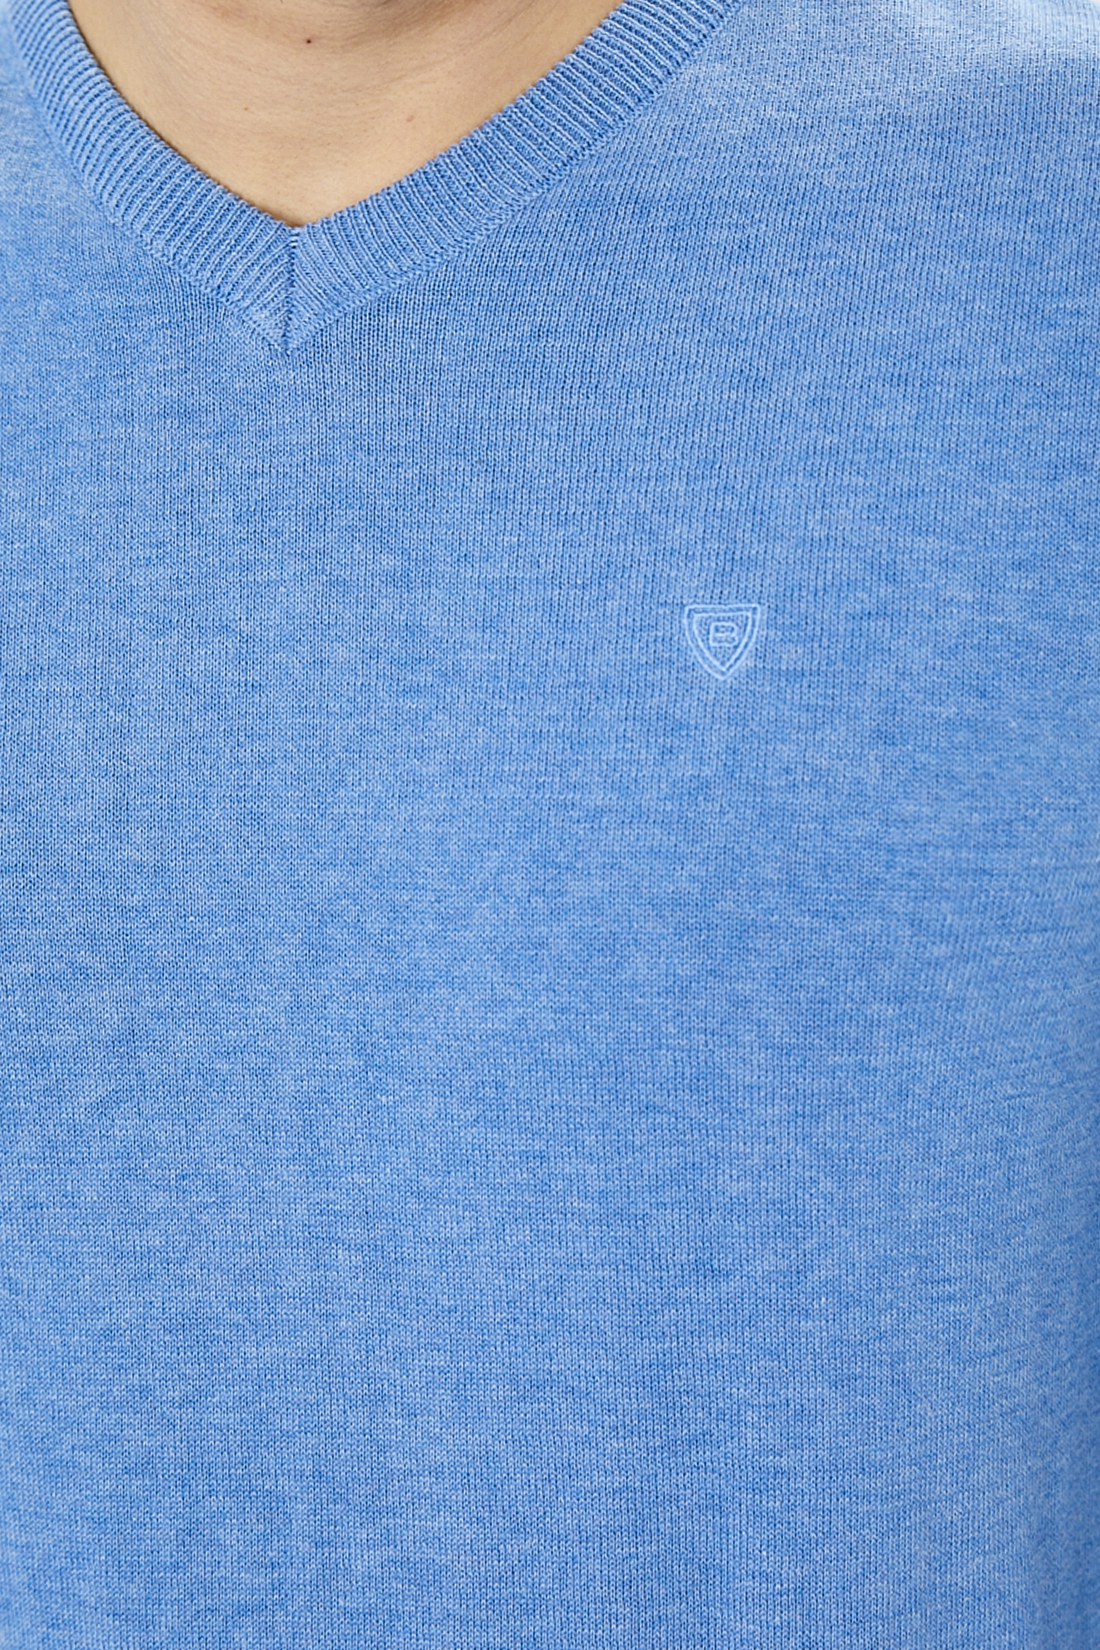 Базовый пуловер с хлопком (арт. baon B631201), размер 3XL, цвет белый Базовый пуловер с хлопком (арт. baon B631201) - фото 3